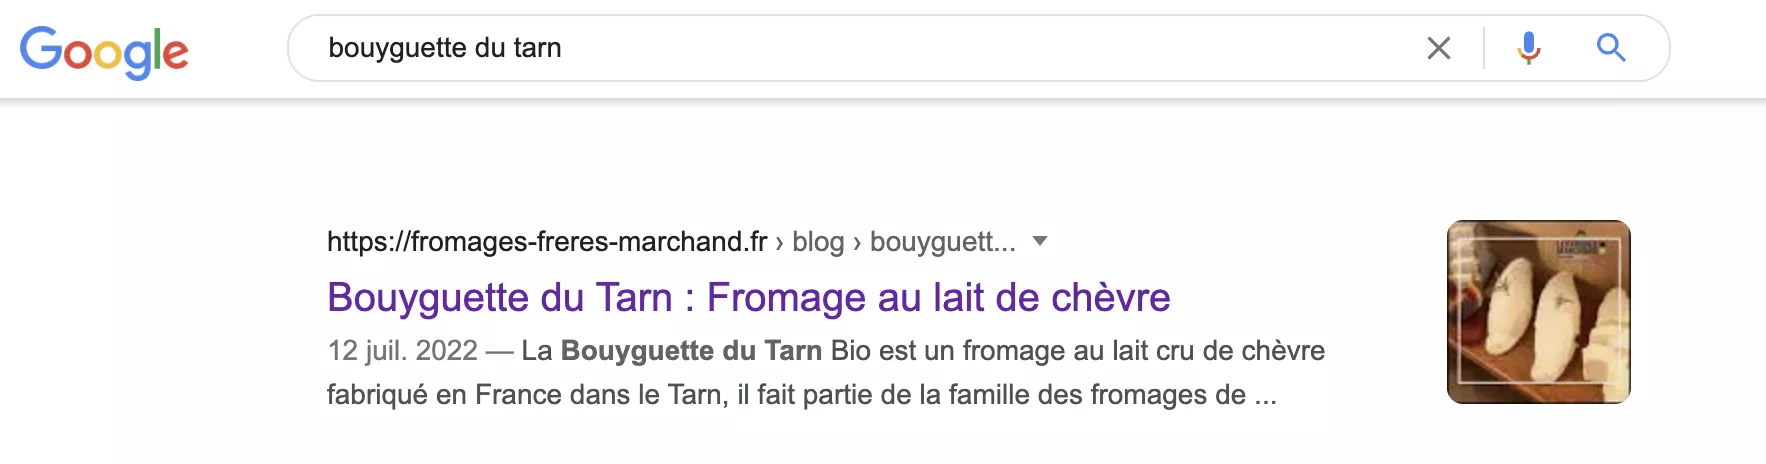 Recherche "Bouyguette du Tarn" sur Google